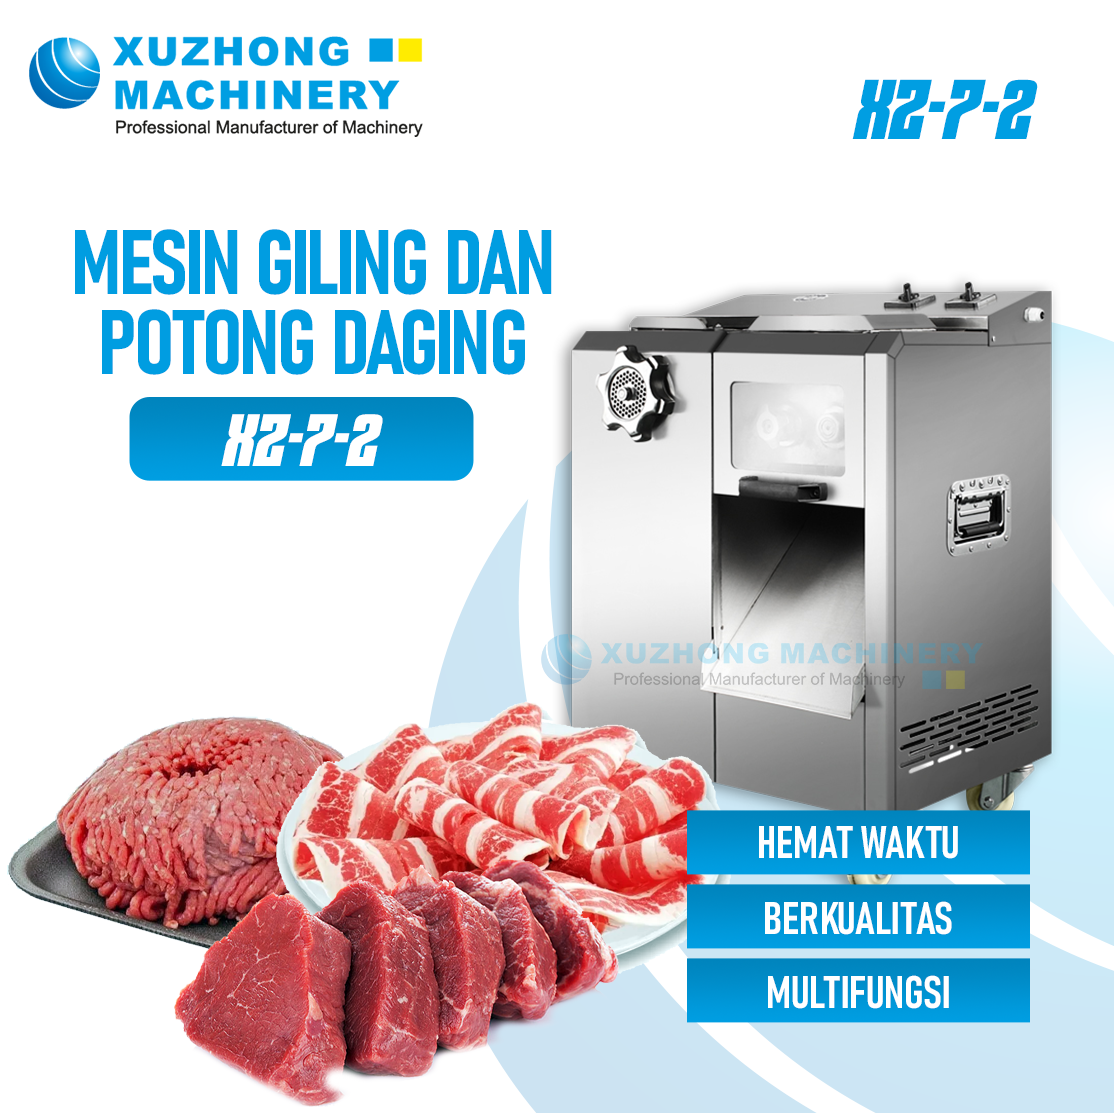 XZ-7-2 Mesin giling dan potong daging